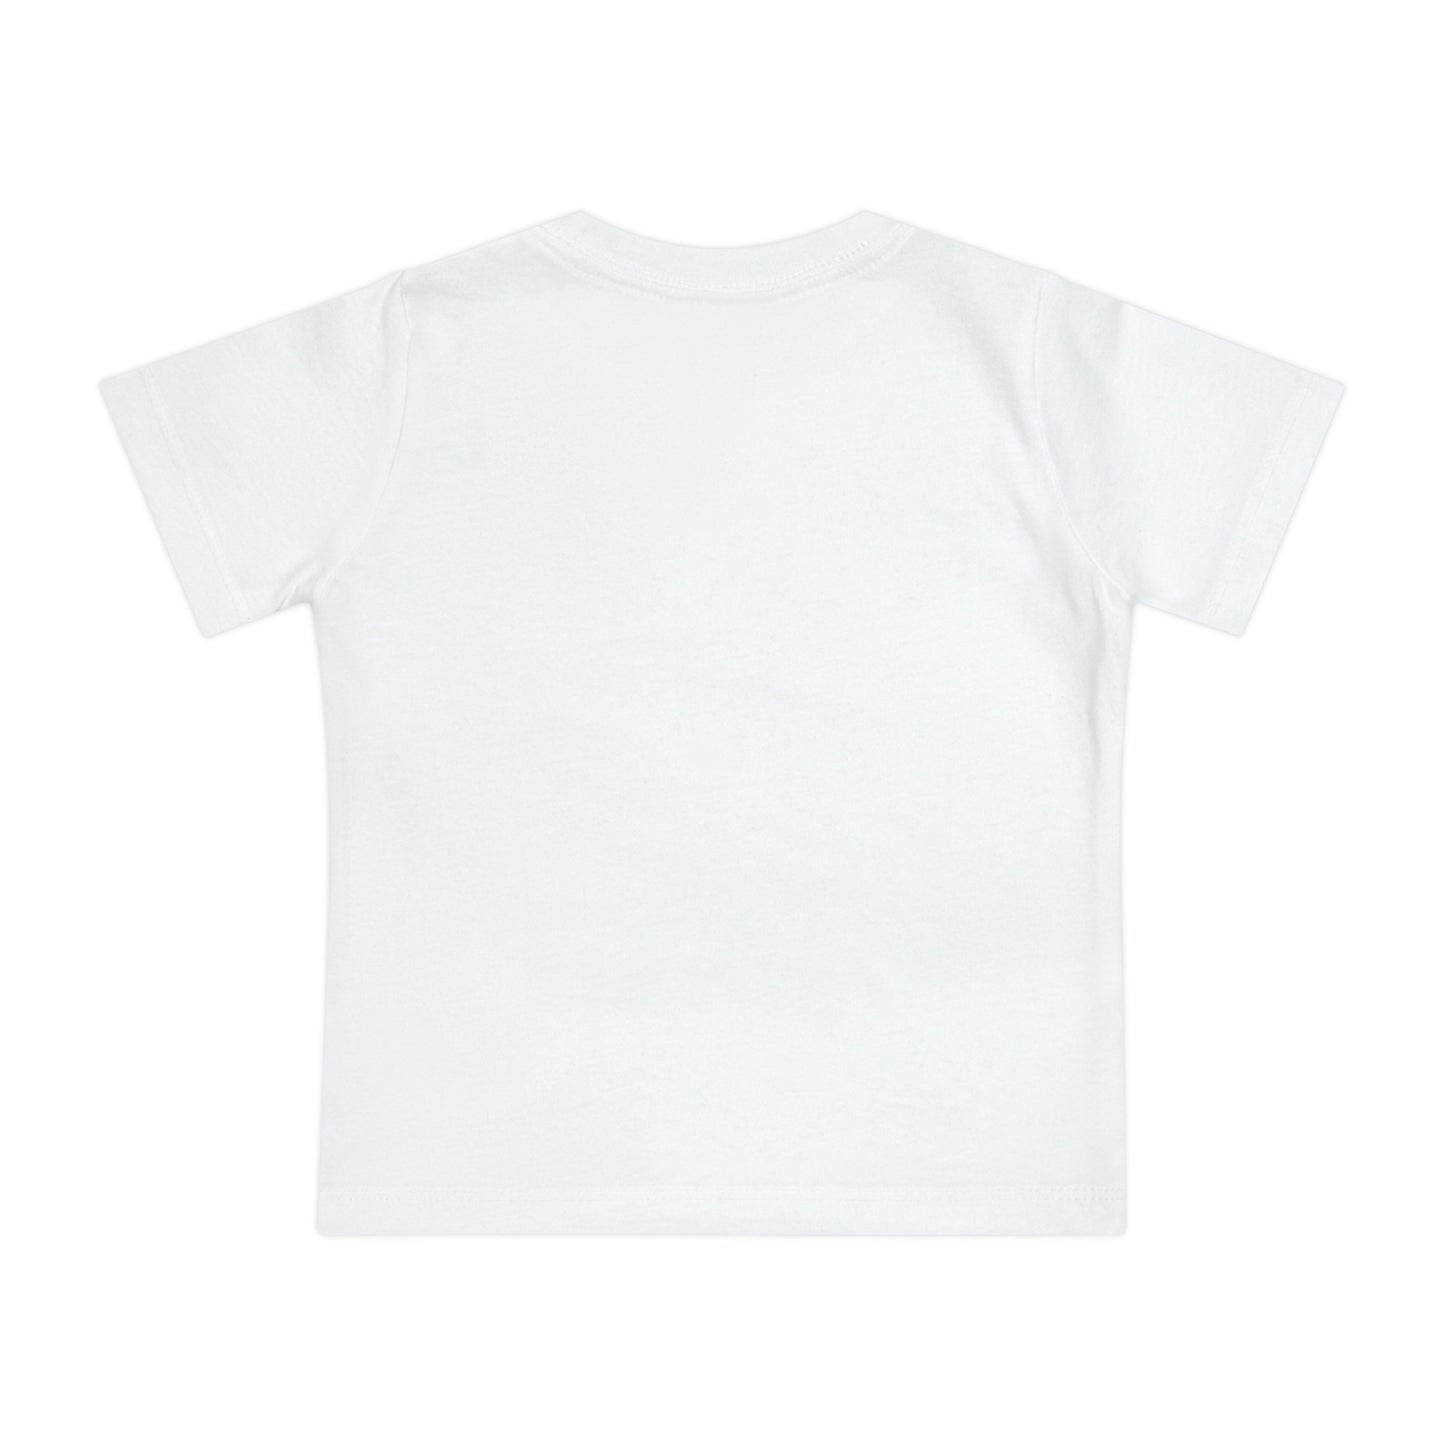 Orange Flowers - Baby Short Sleeve T-Shirt